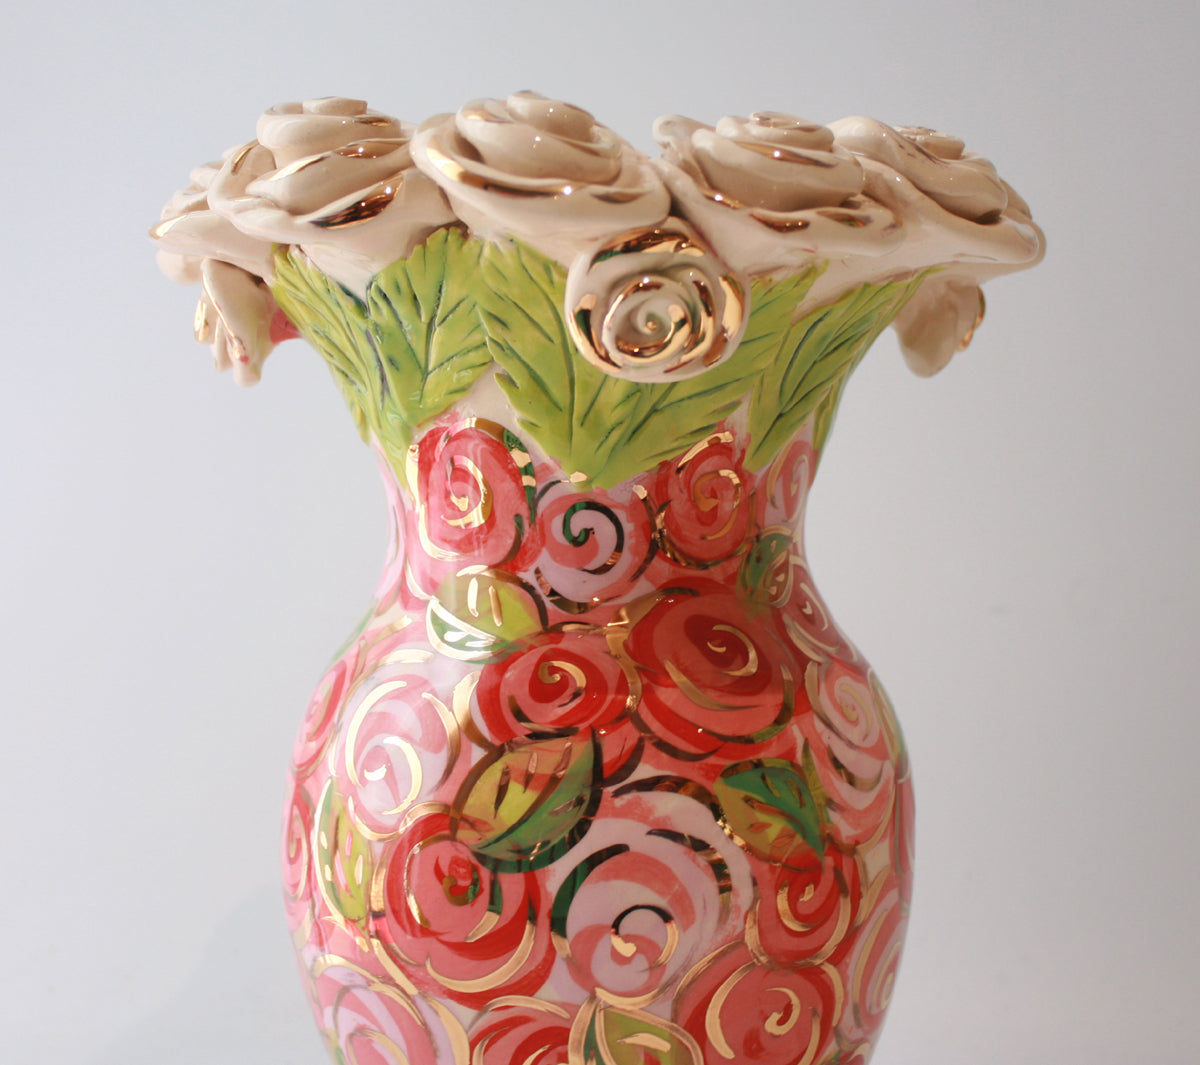 Medium Rose Encrusted Vase in Pink Rosebush